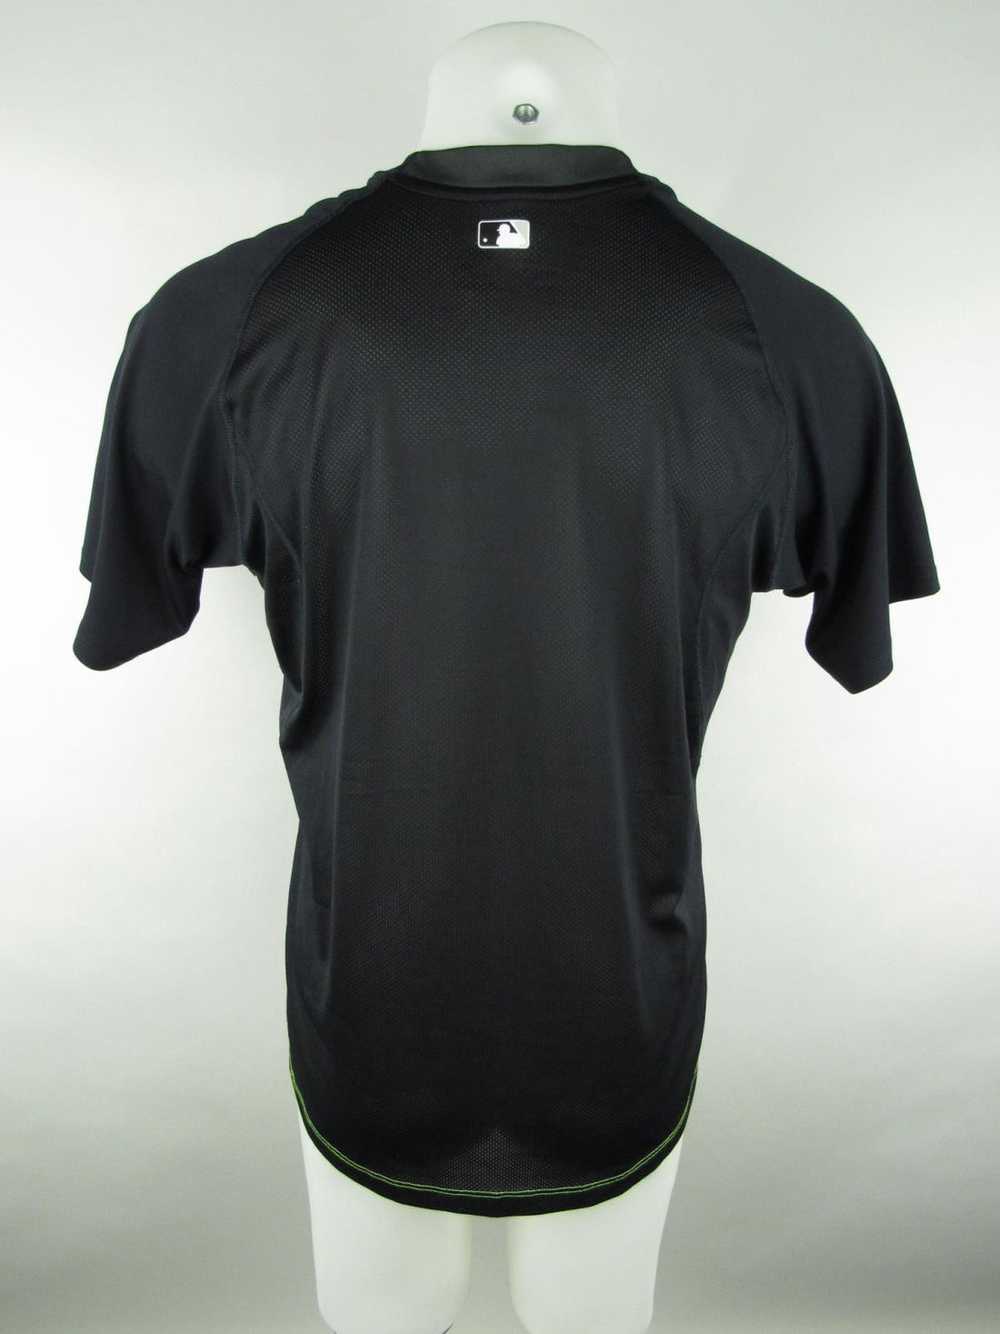 Small) New Vintage Nike Ken Griffey Jr. / Swingman Dri-FIT Shirt